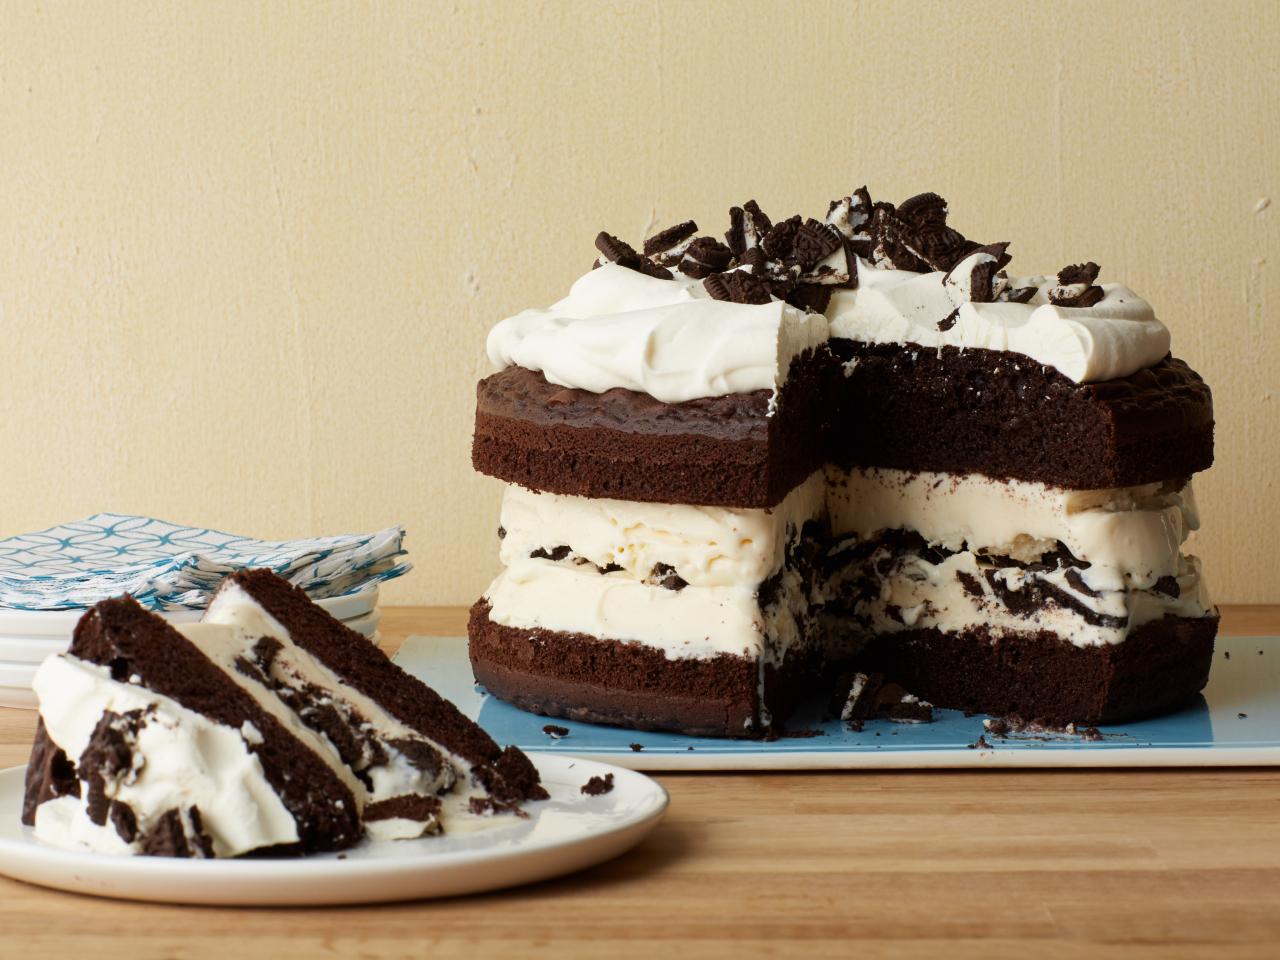 Step-by-step chocolate cake